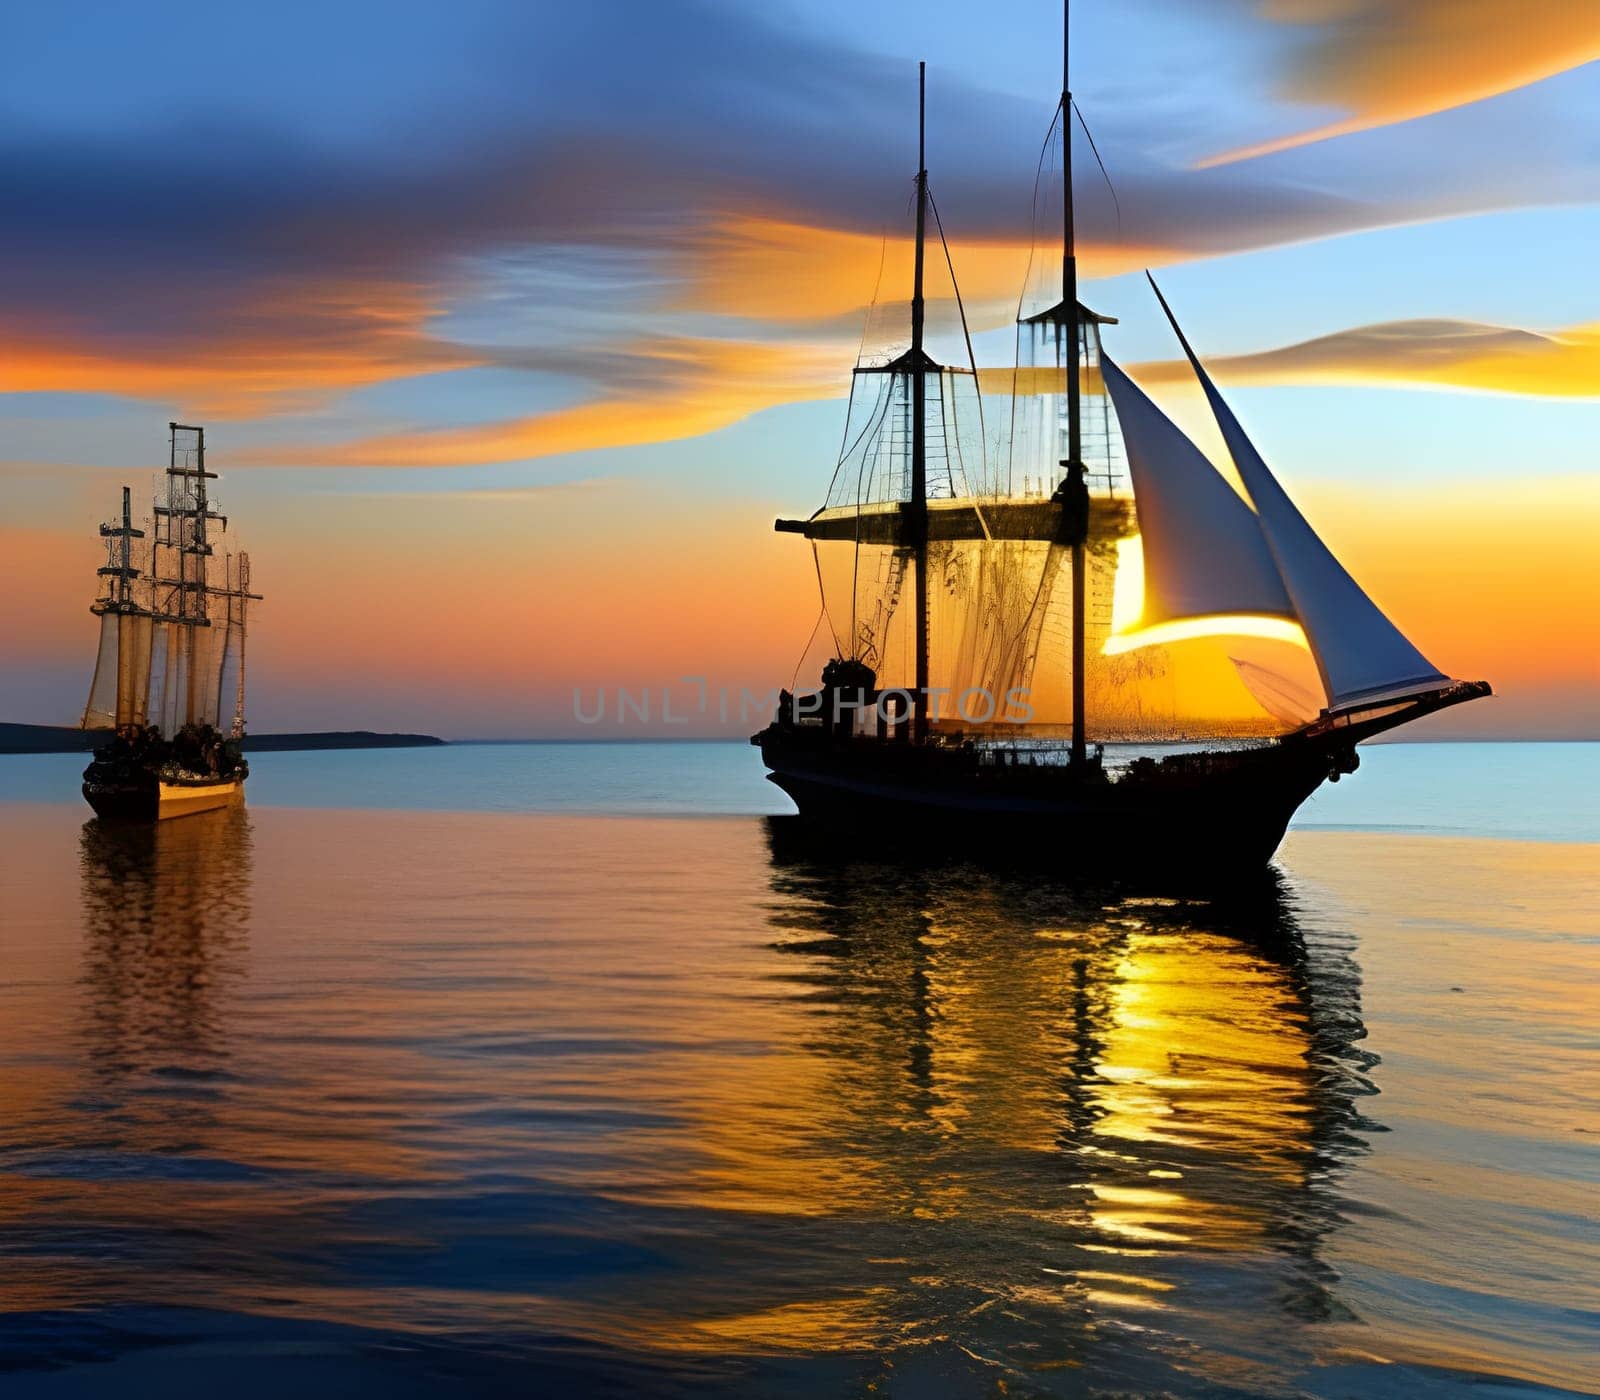 Sailing ships by WielandTeixeira